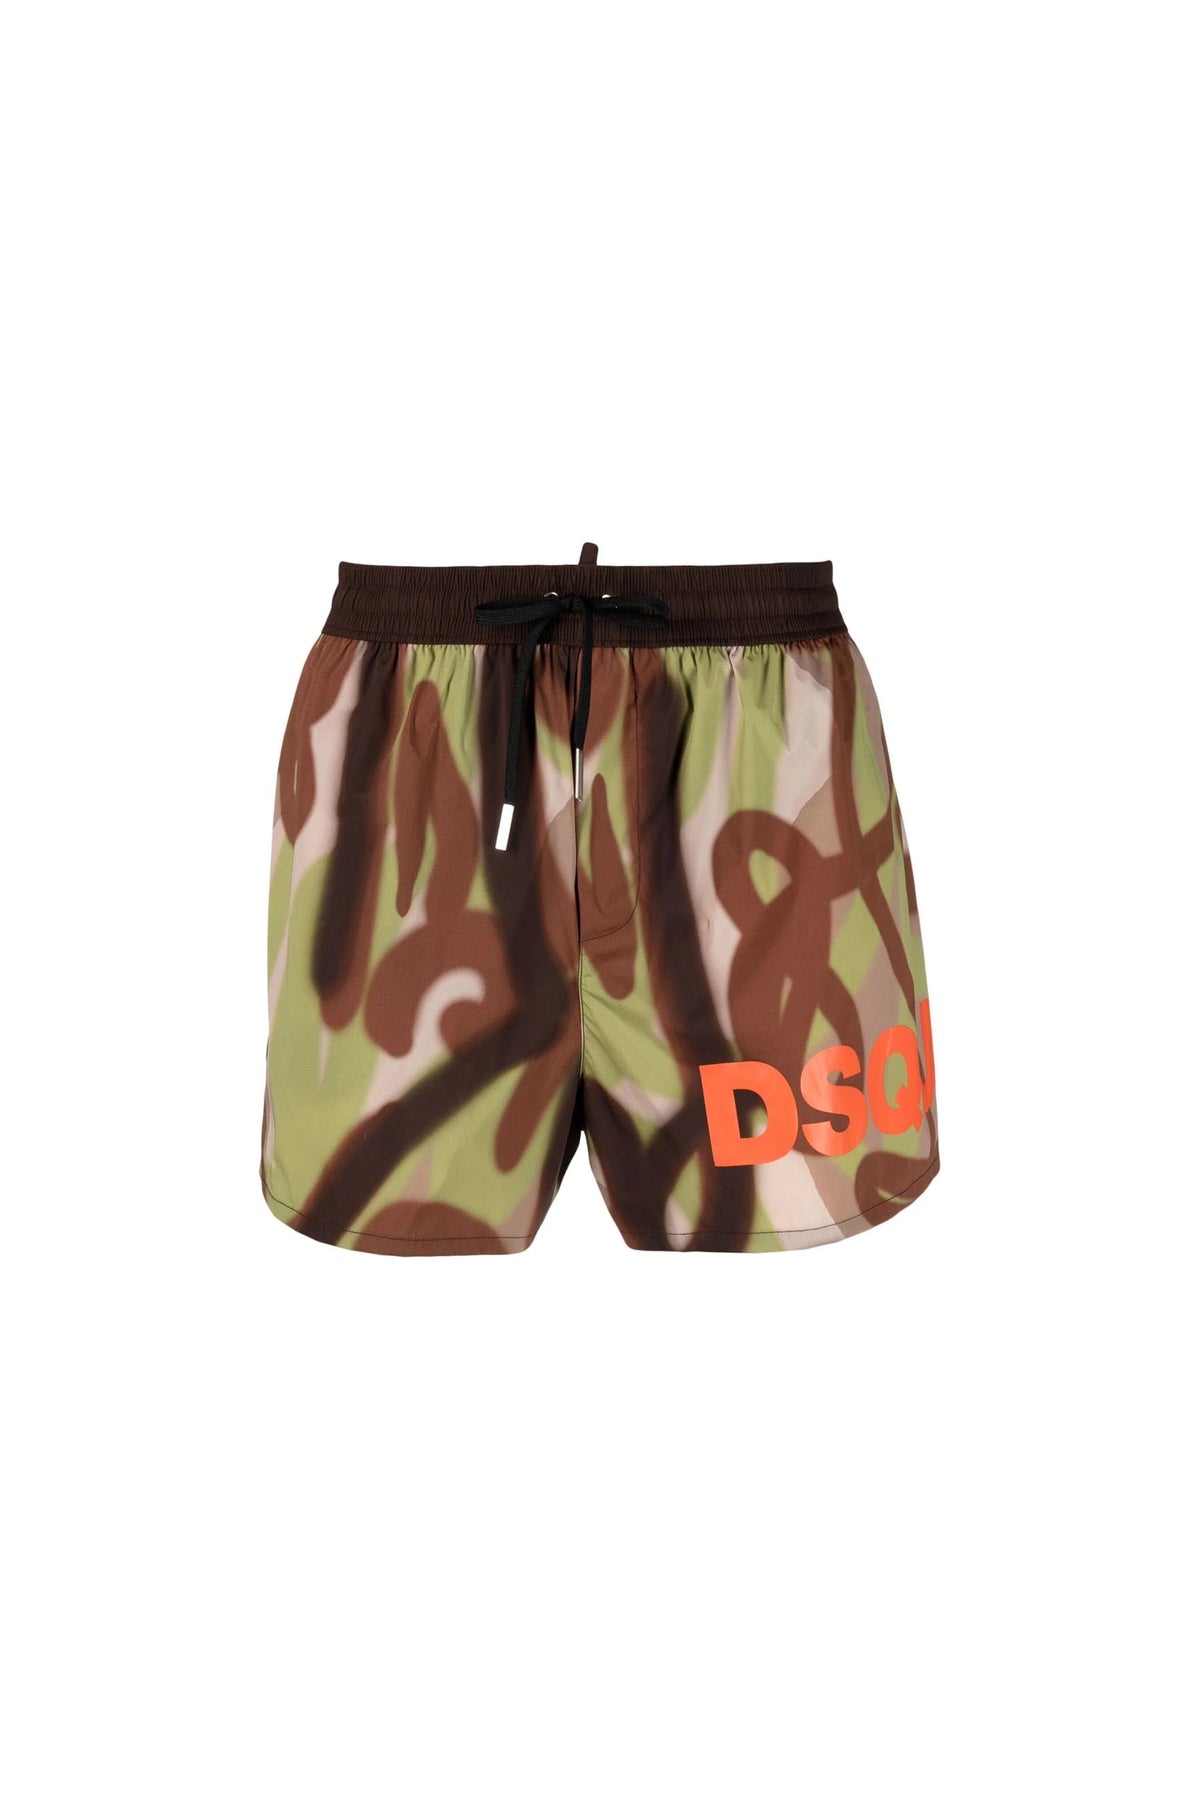 Dsquared2 spray-paint effect swim shorts